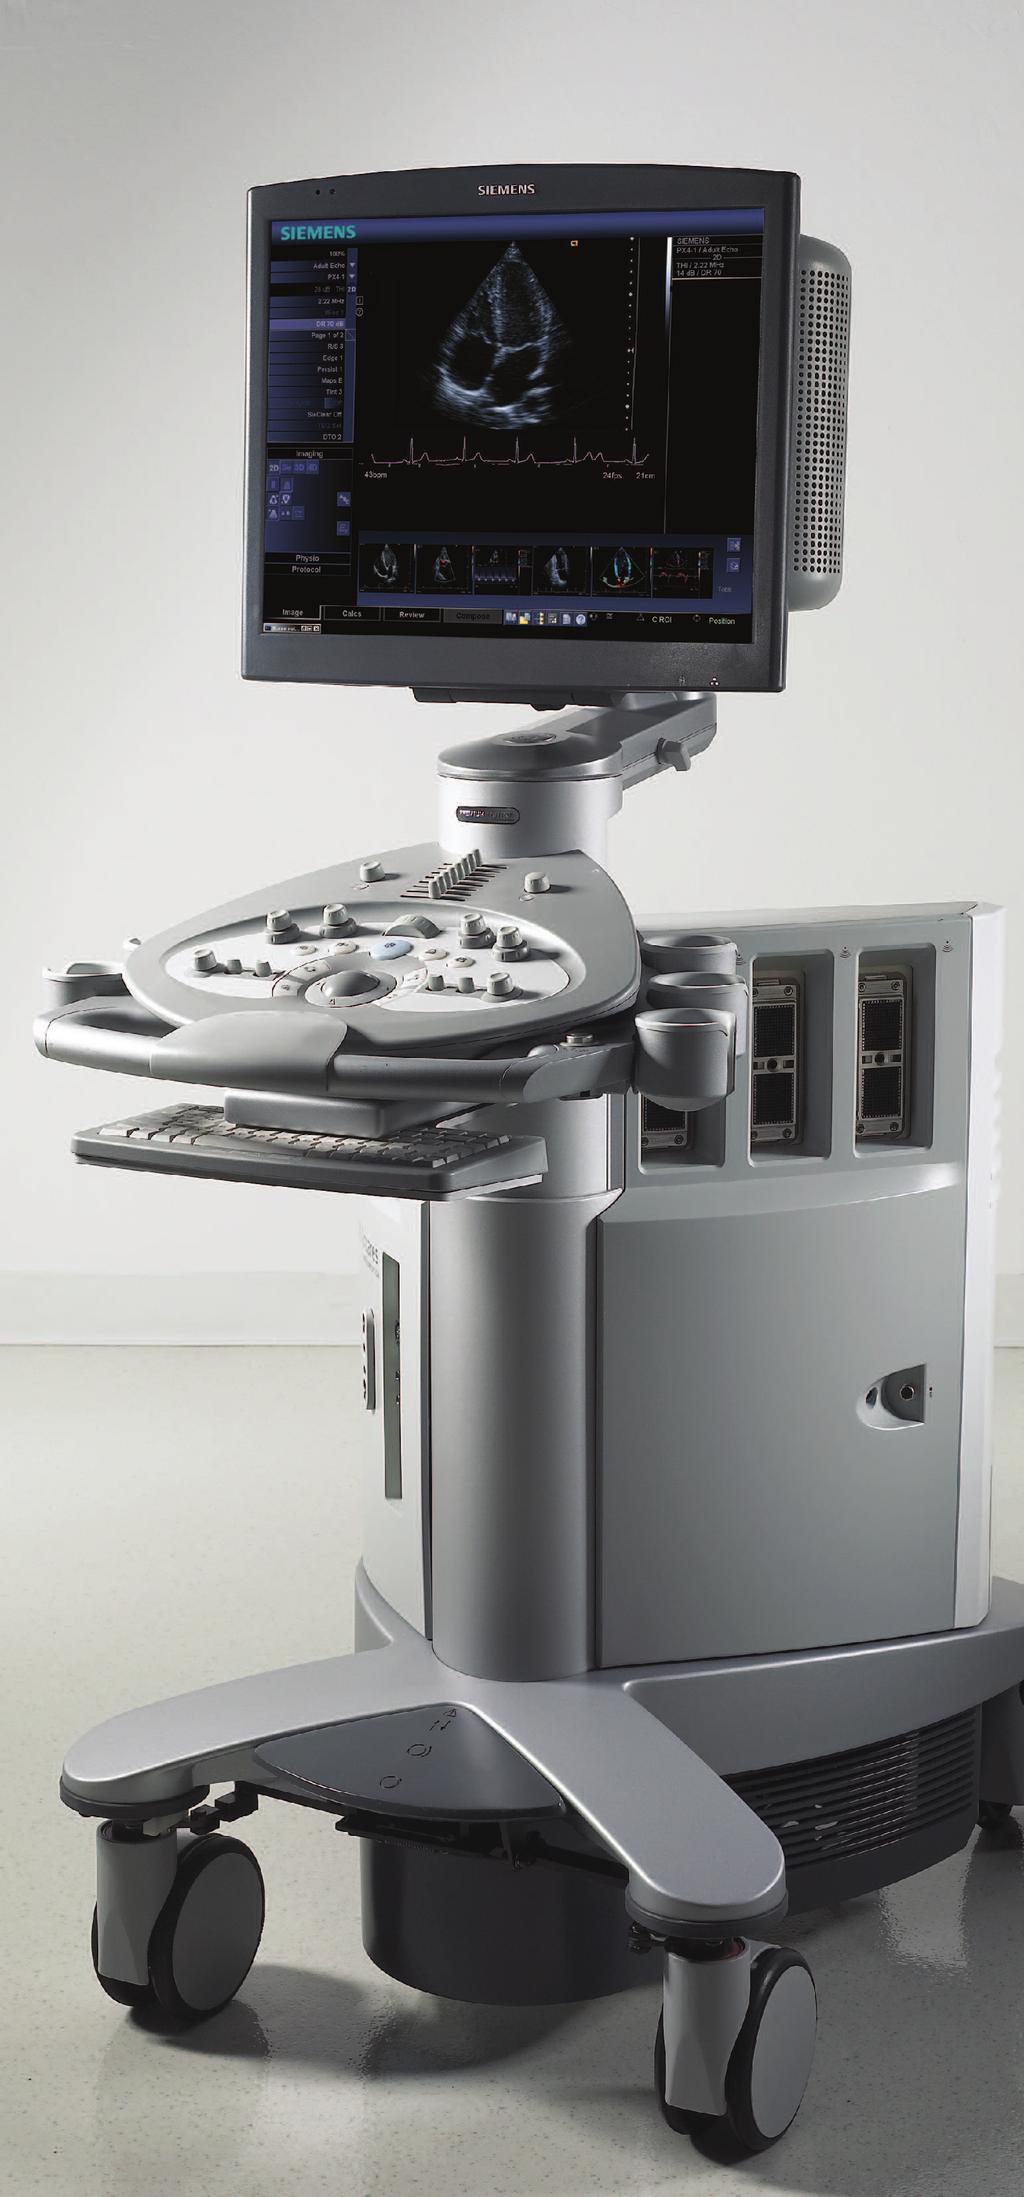 ACUSON Antares Ultrasound System